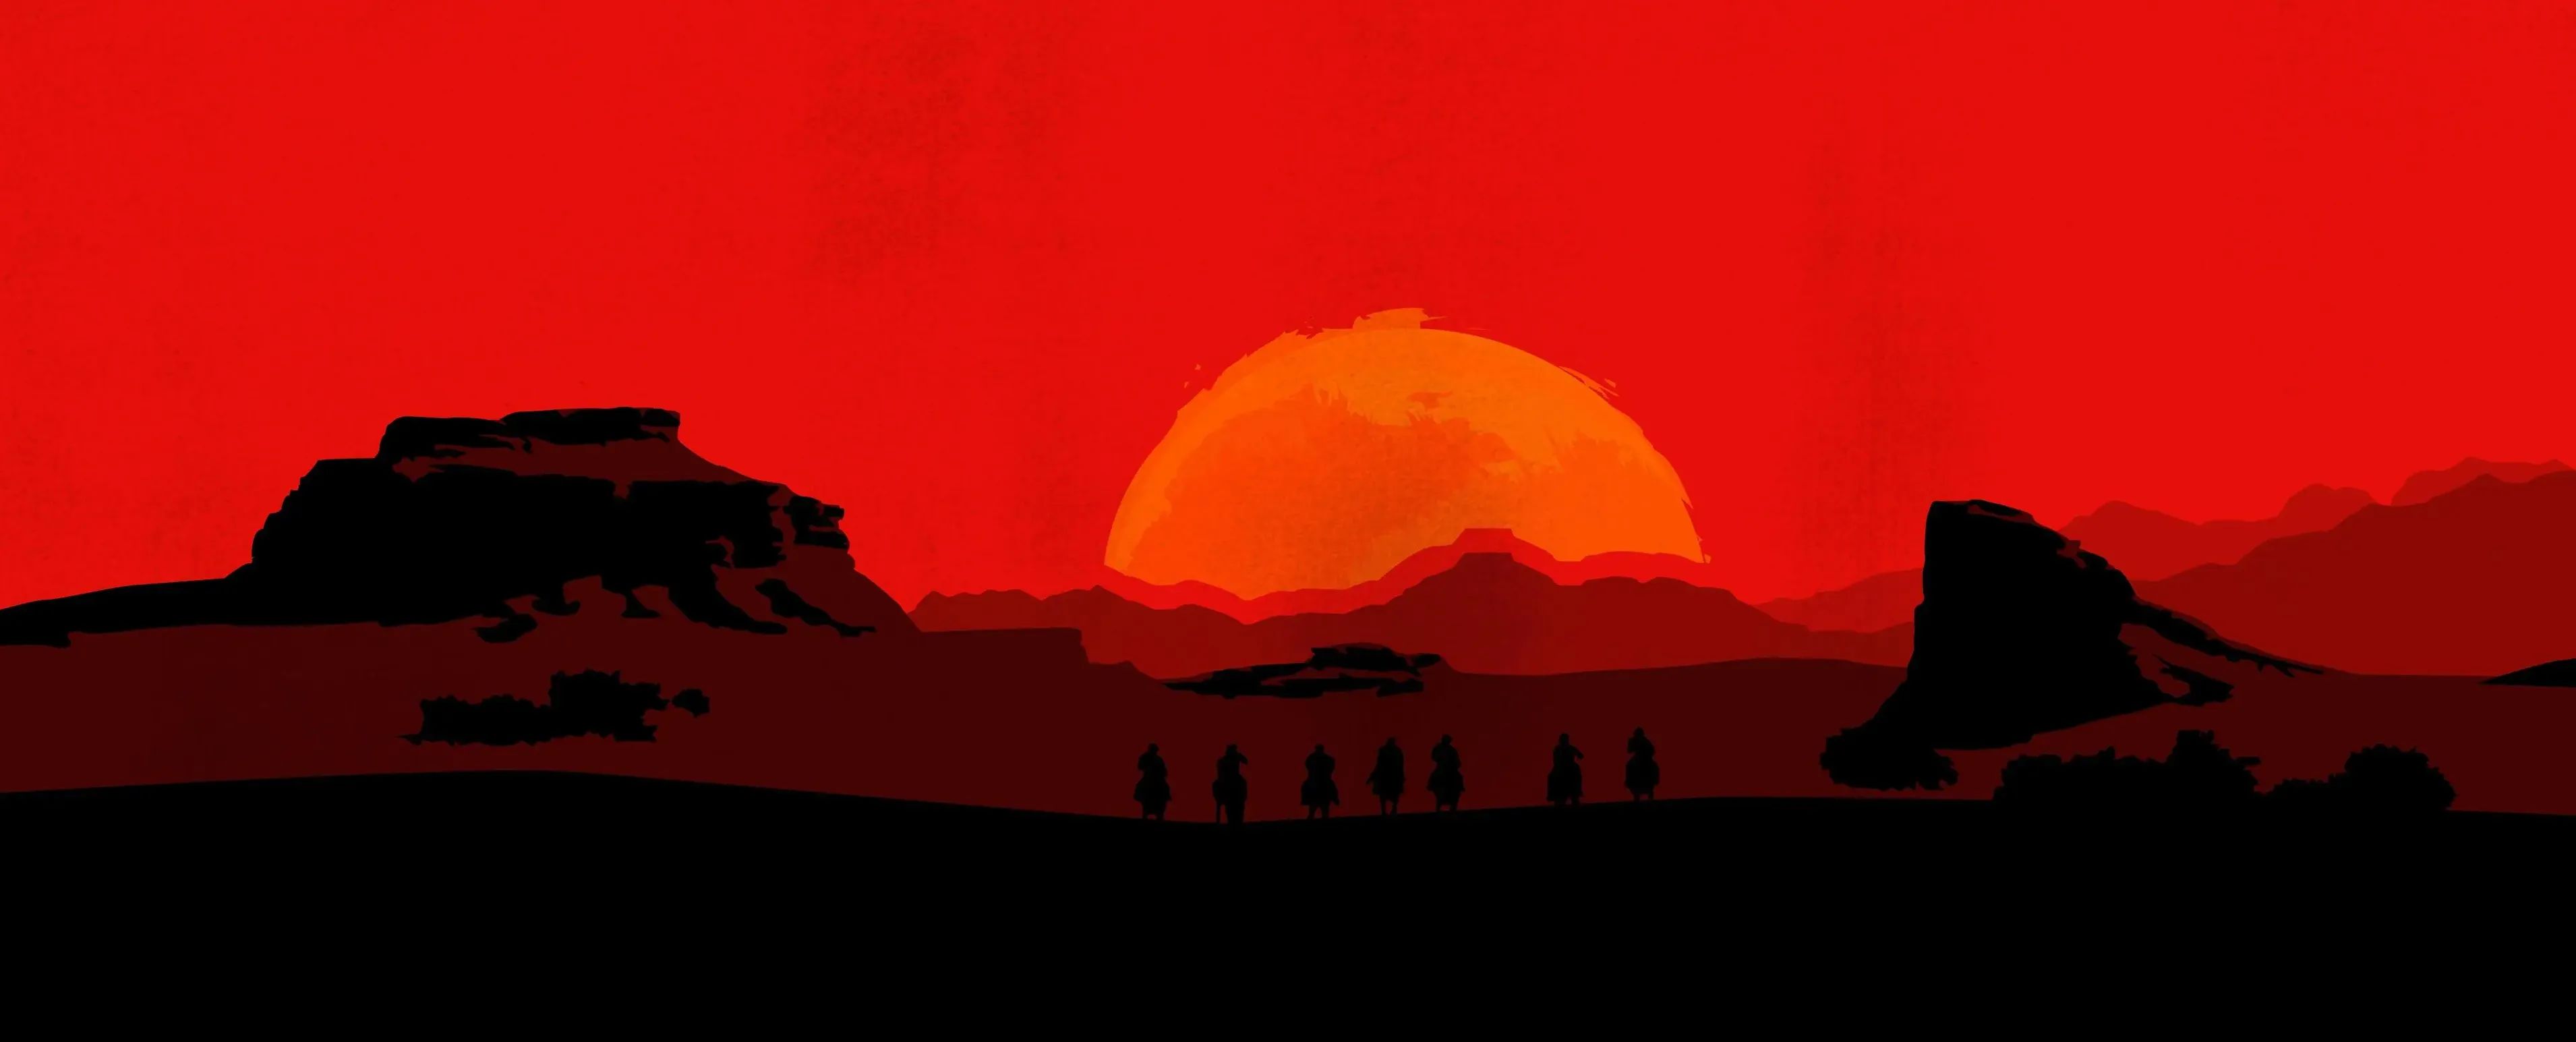 Как Red Dead Redemption заново придумала вестерн